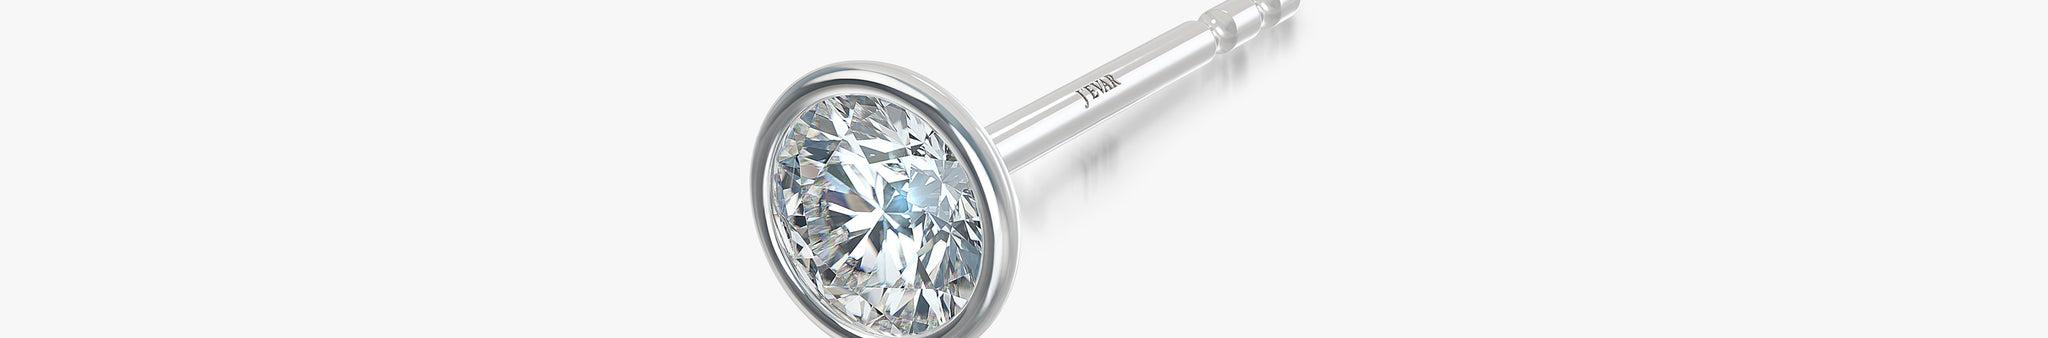 J'EVAR 18KT White Gold Elements ALTR Lab Grown Diamond Earrings Prospective View